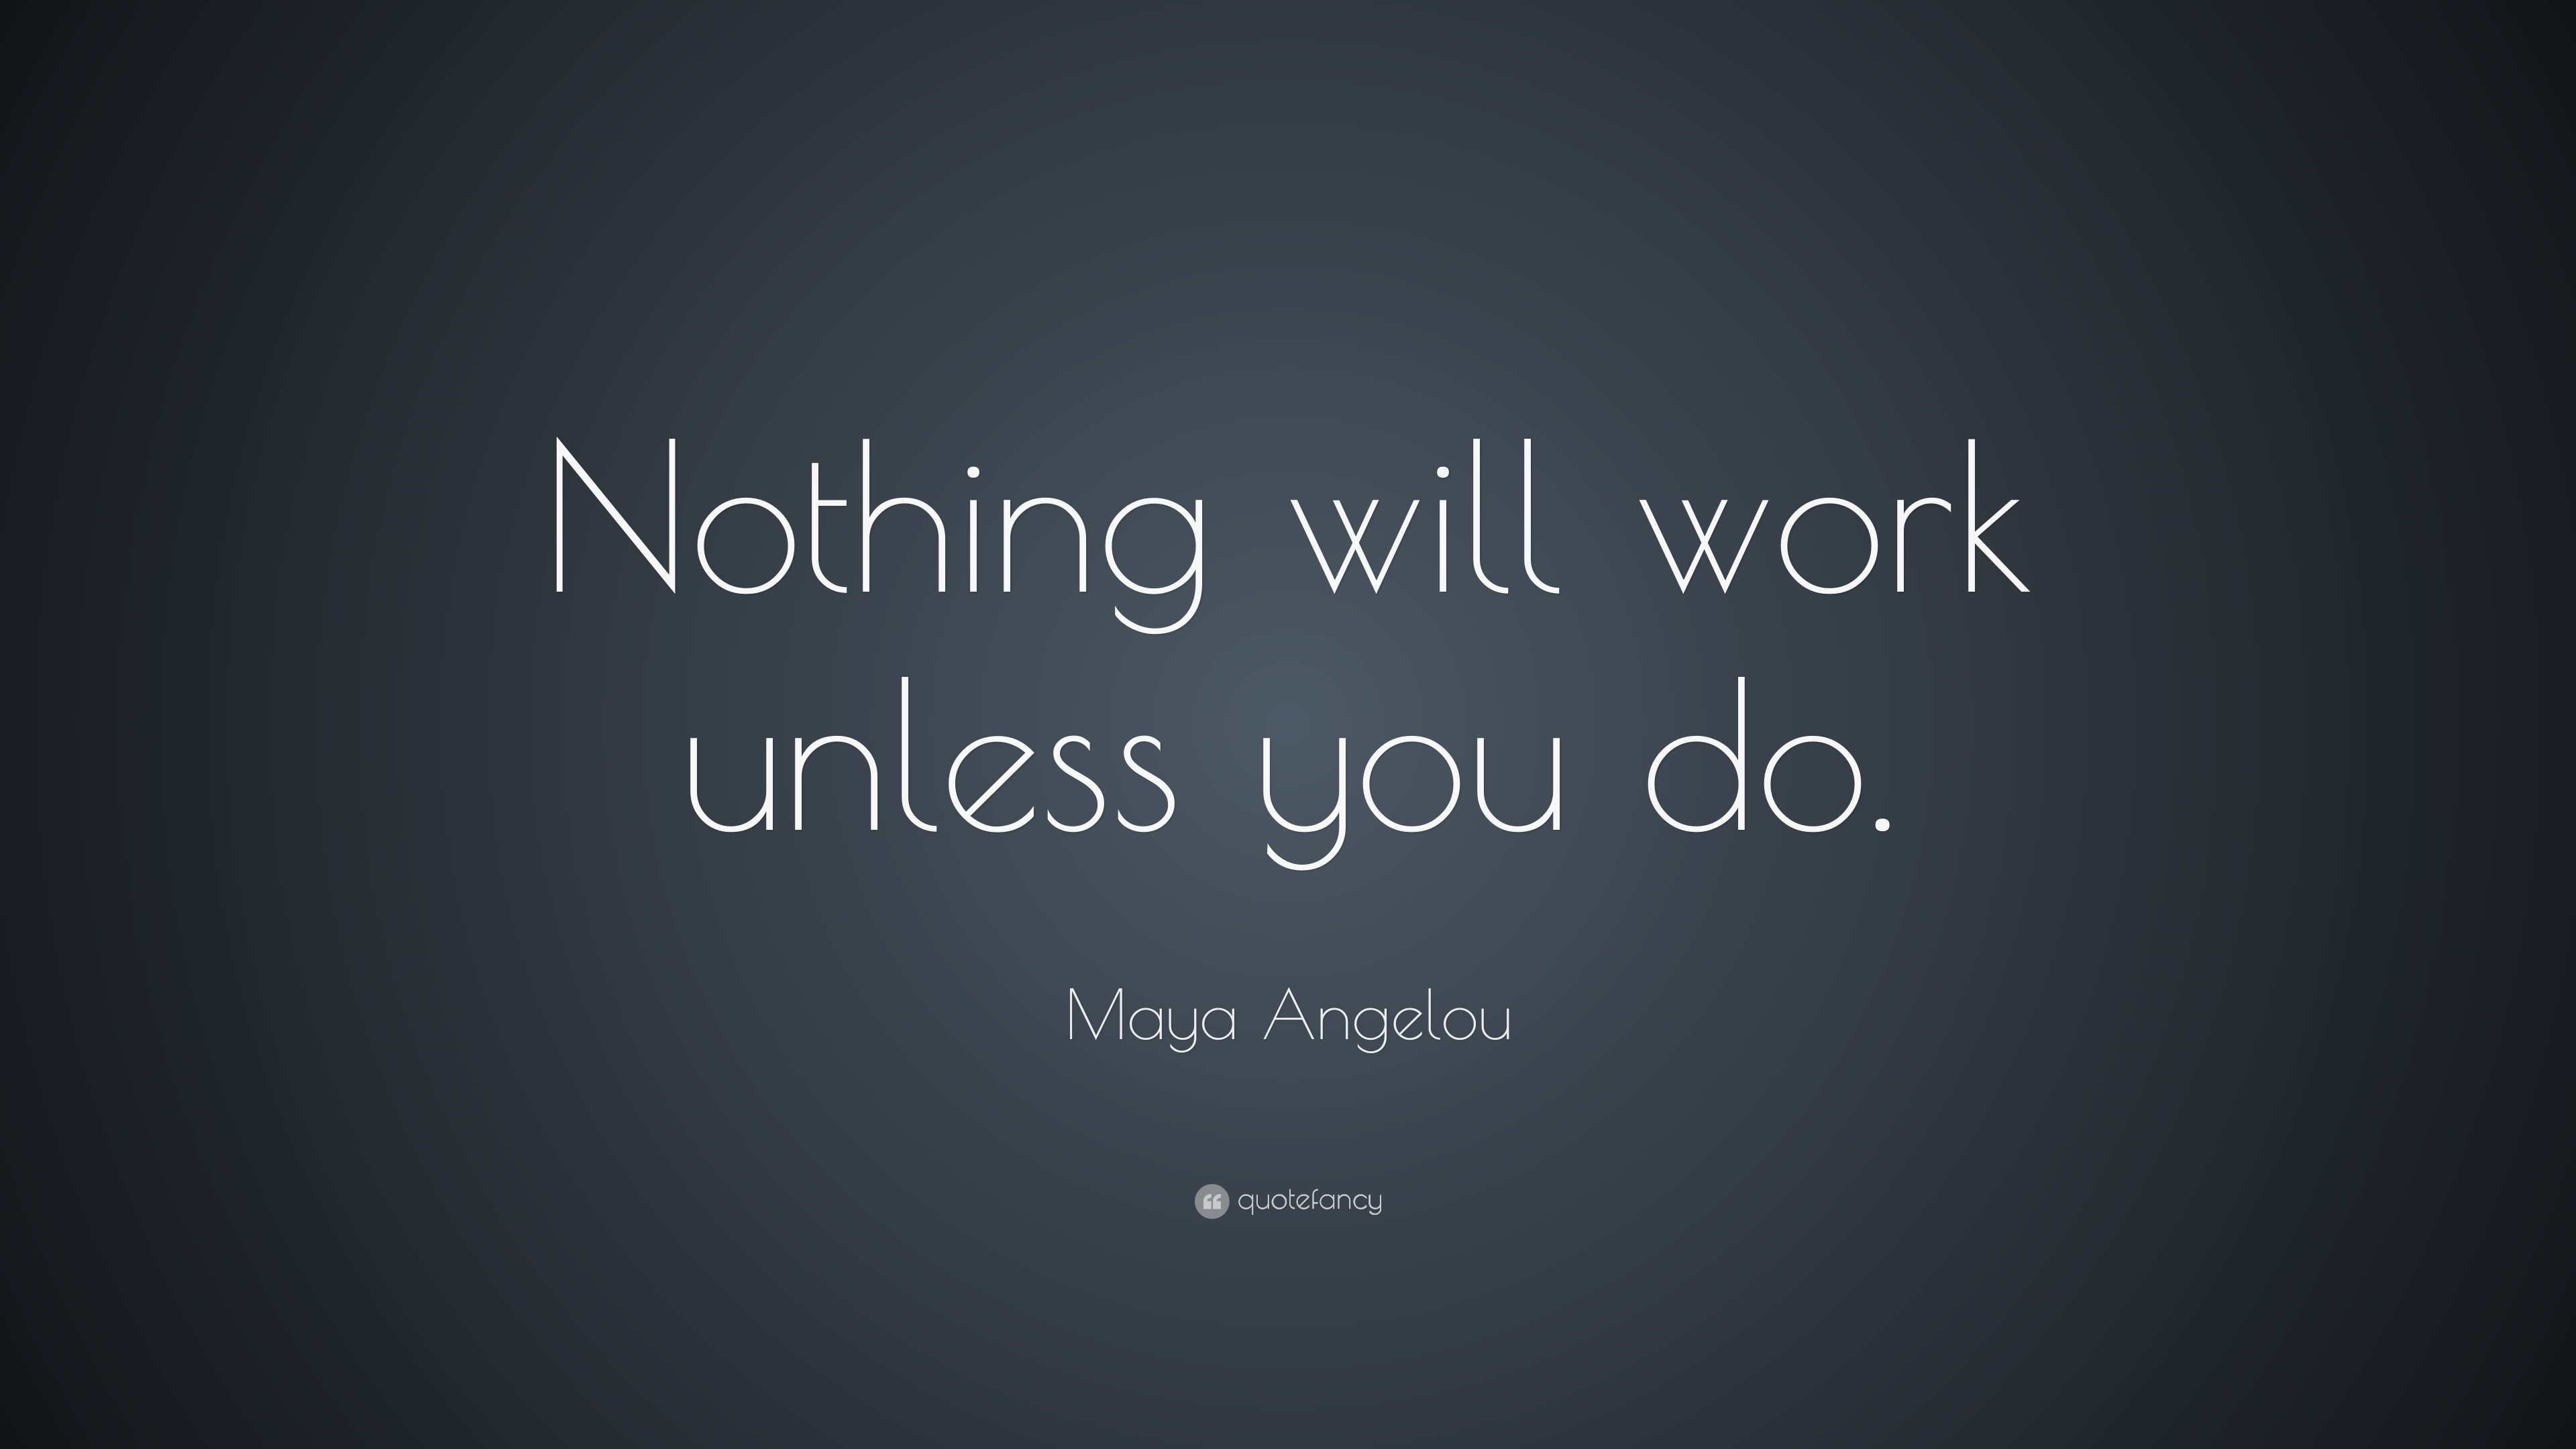 3840x2160 Maya Angelou Quotes (25 wallpapers) - Quotefancy